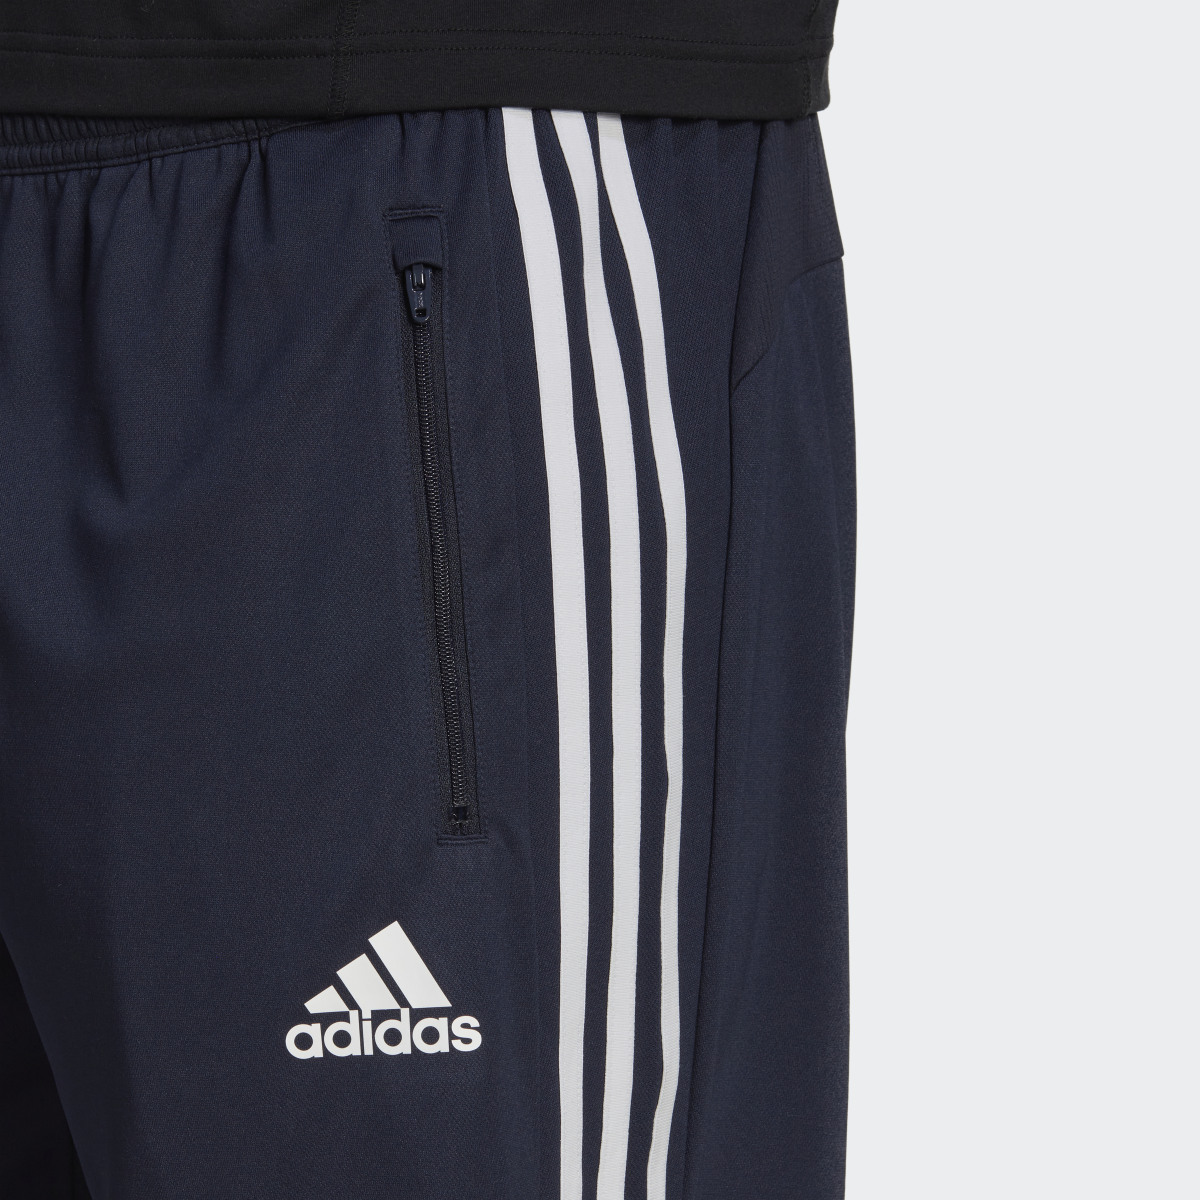 Adidas Primeblue Designed To Move Sport 3-Stripes Shorts. 5